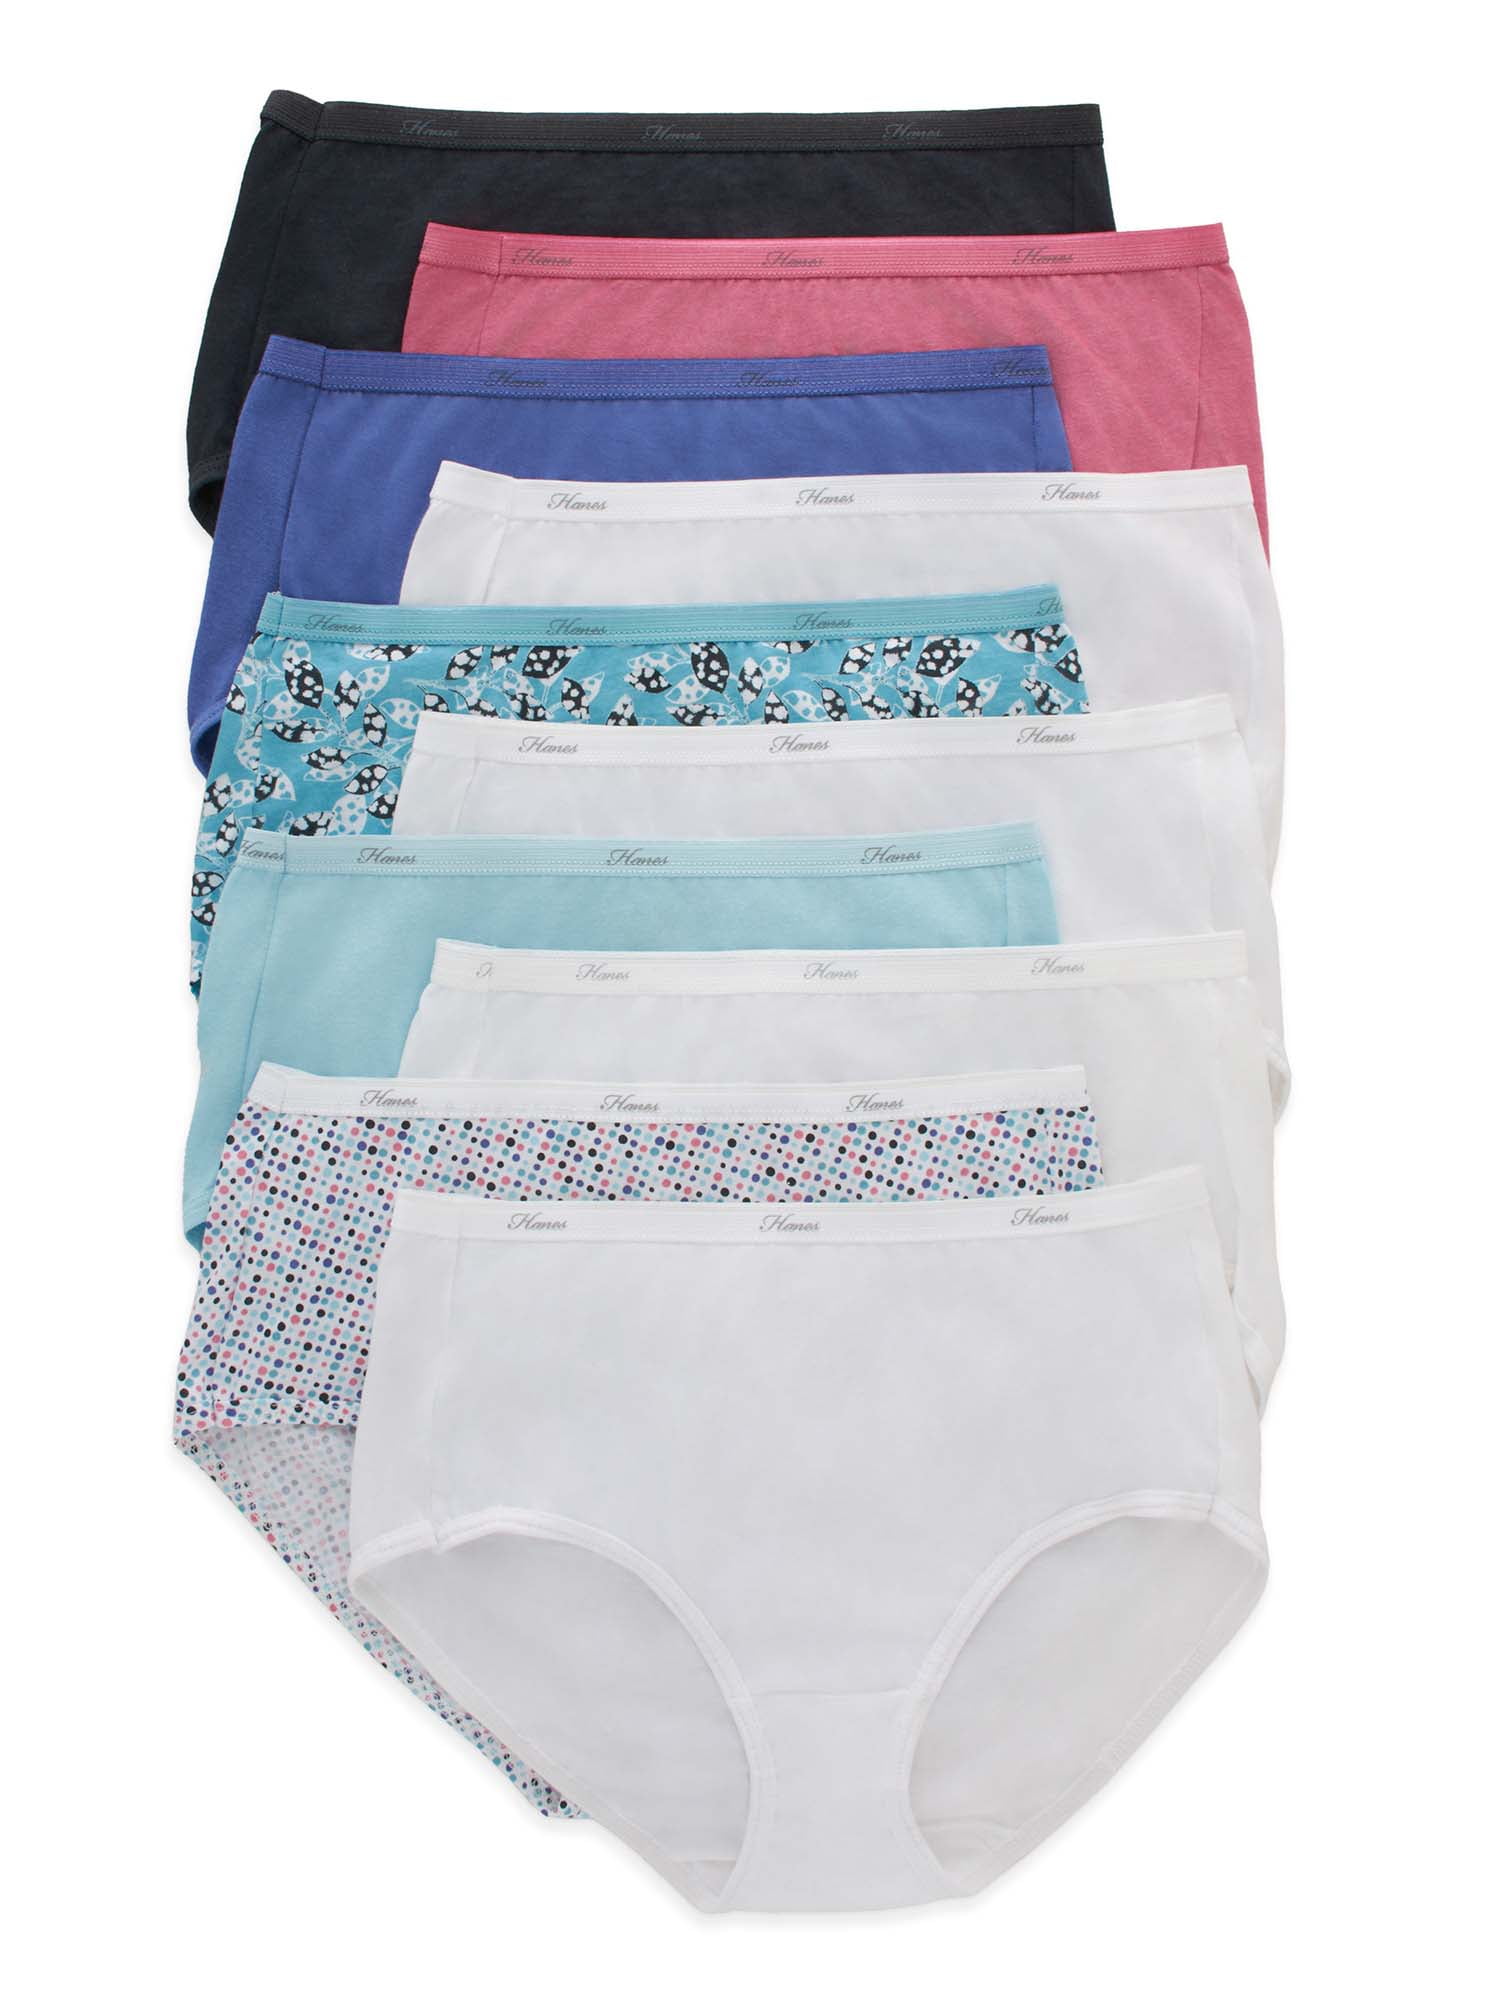 Hanes Women's Cotton Assorted Brief Panties, 10-Pack